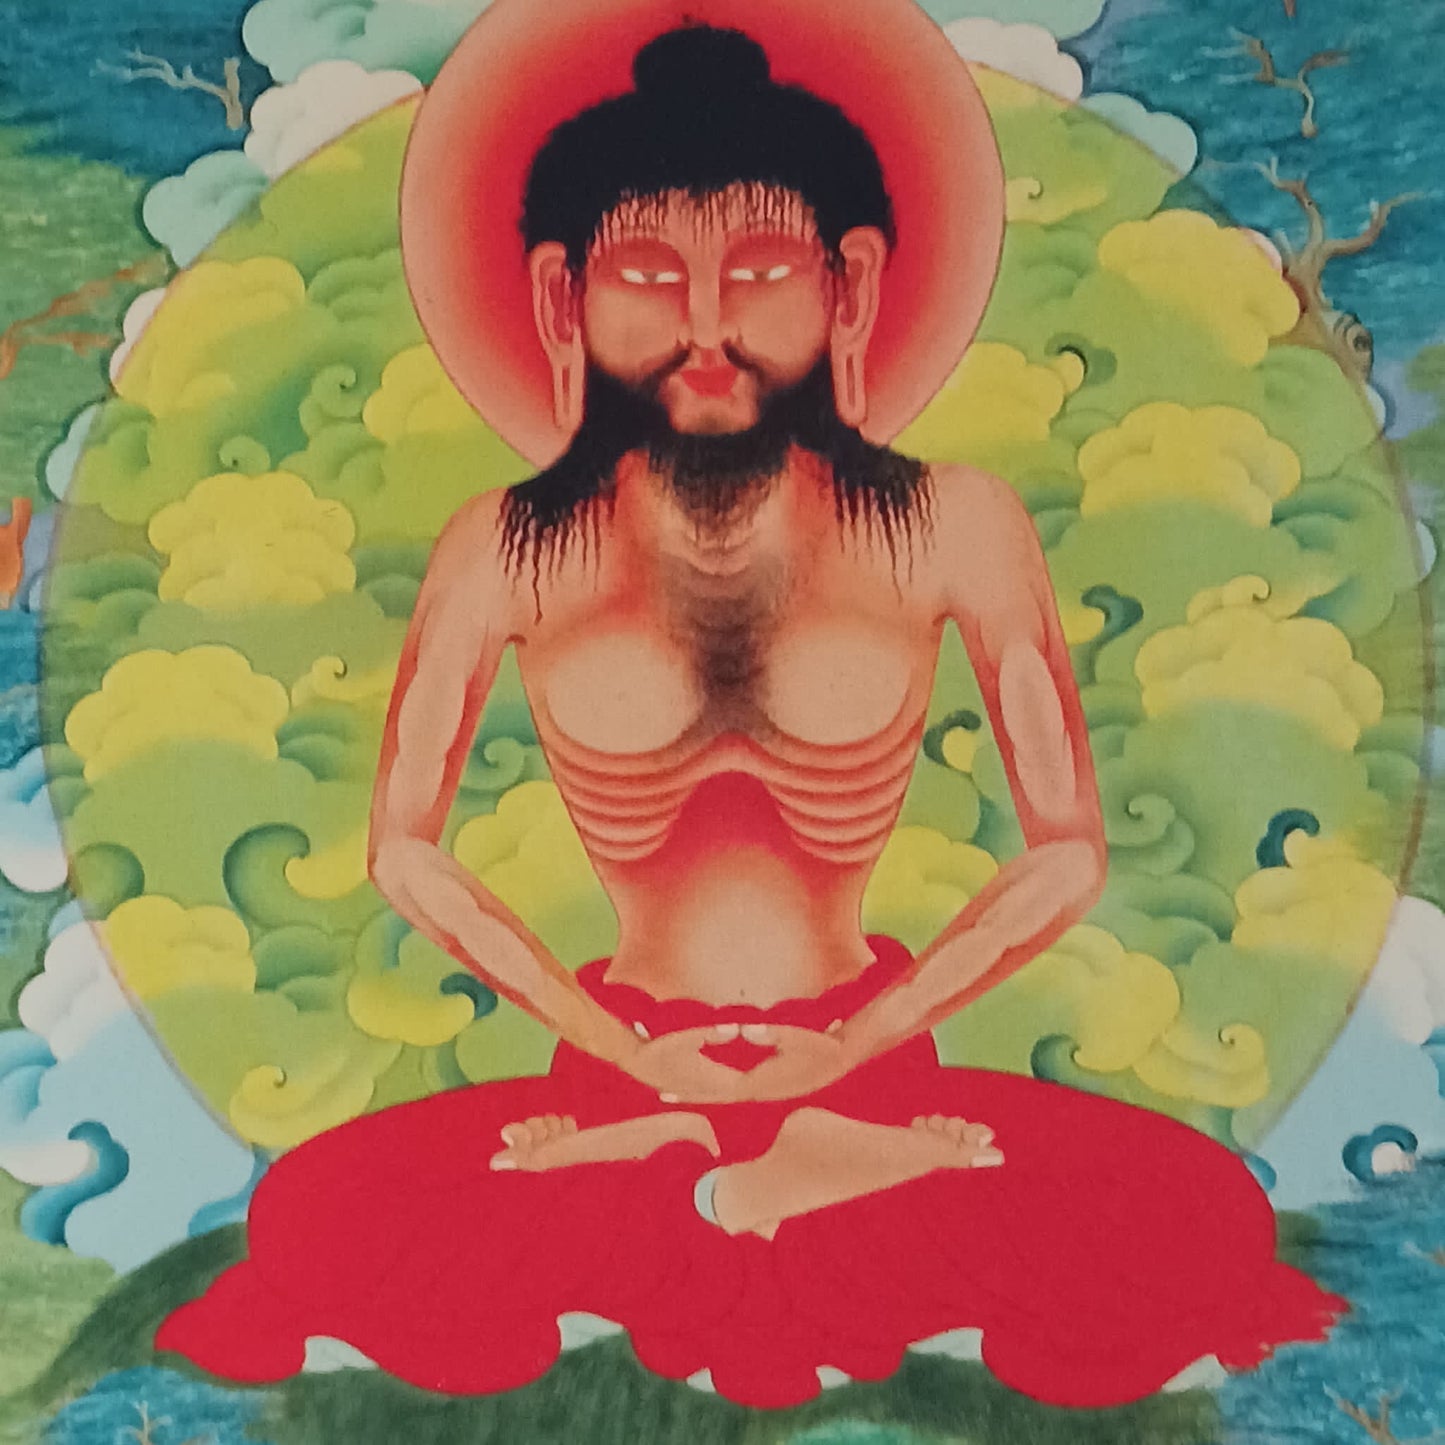 Buddhist Book of Meditation | Heart Advice for Retreat Book